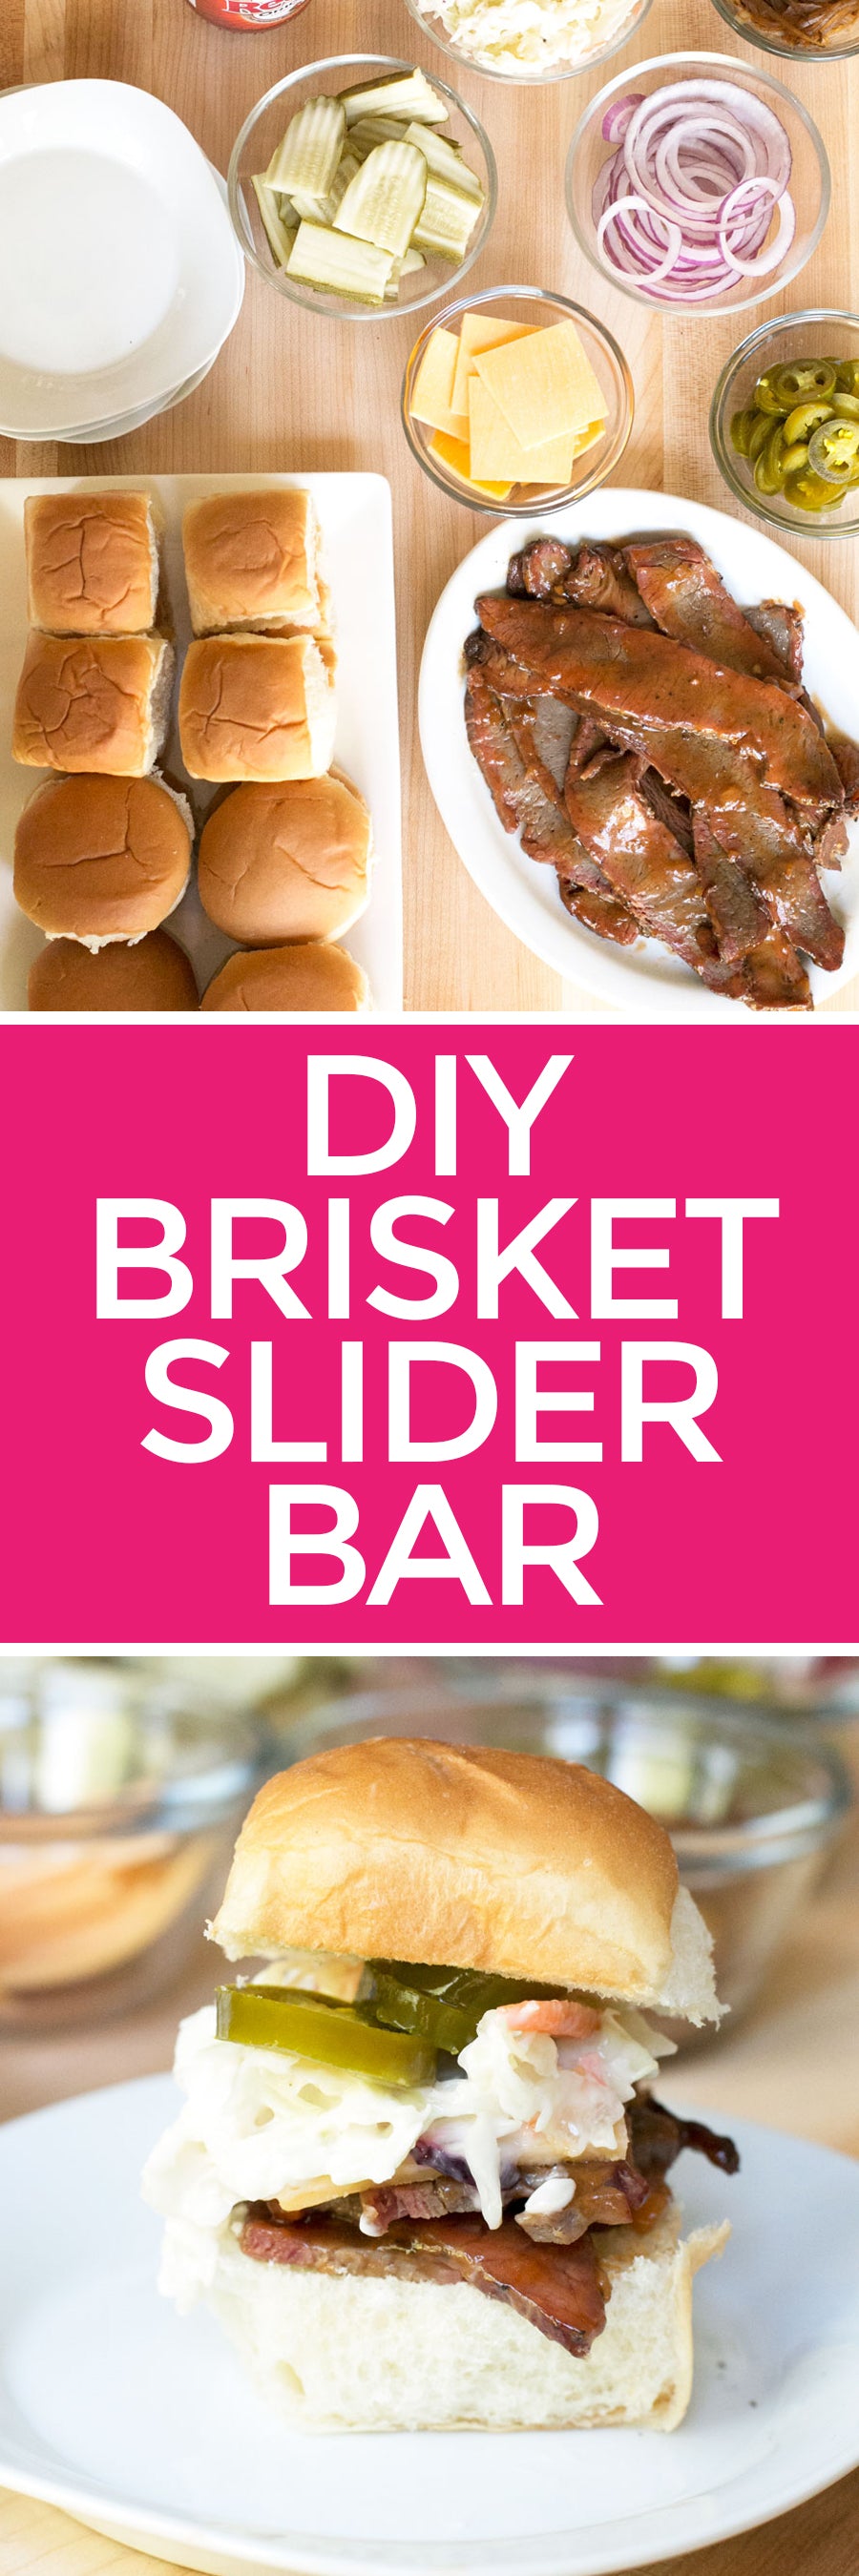 DIY Brisket Slider Bar | pigofthemonth.com #BBQ #barbecue #sliders